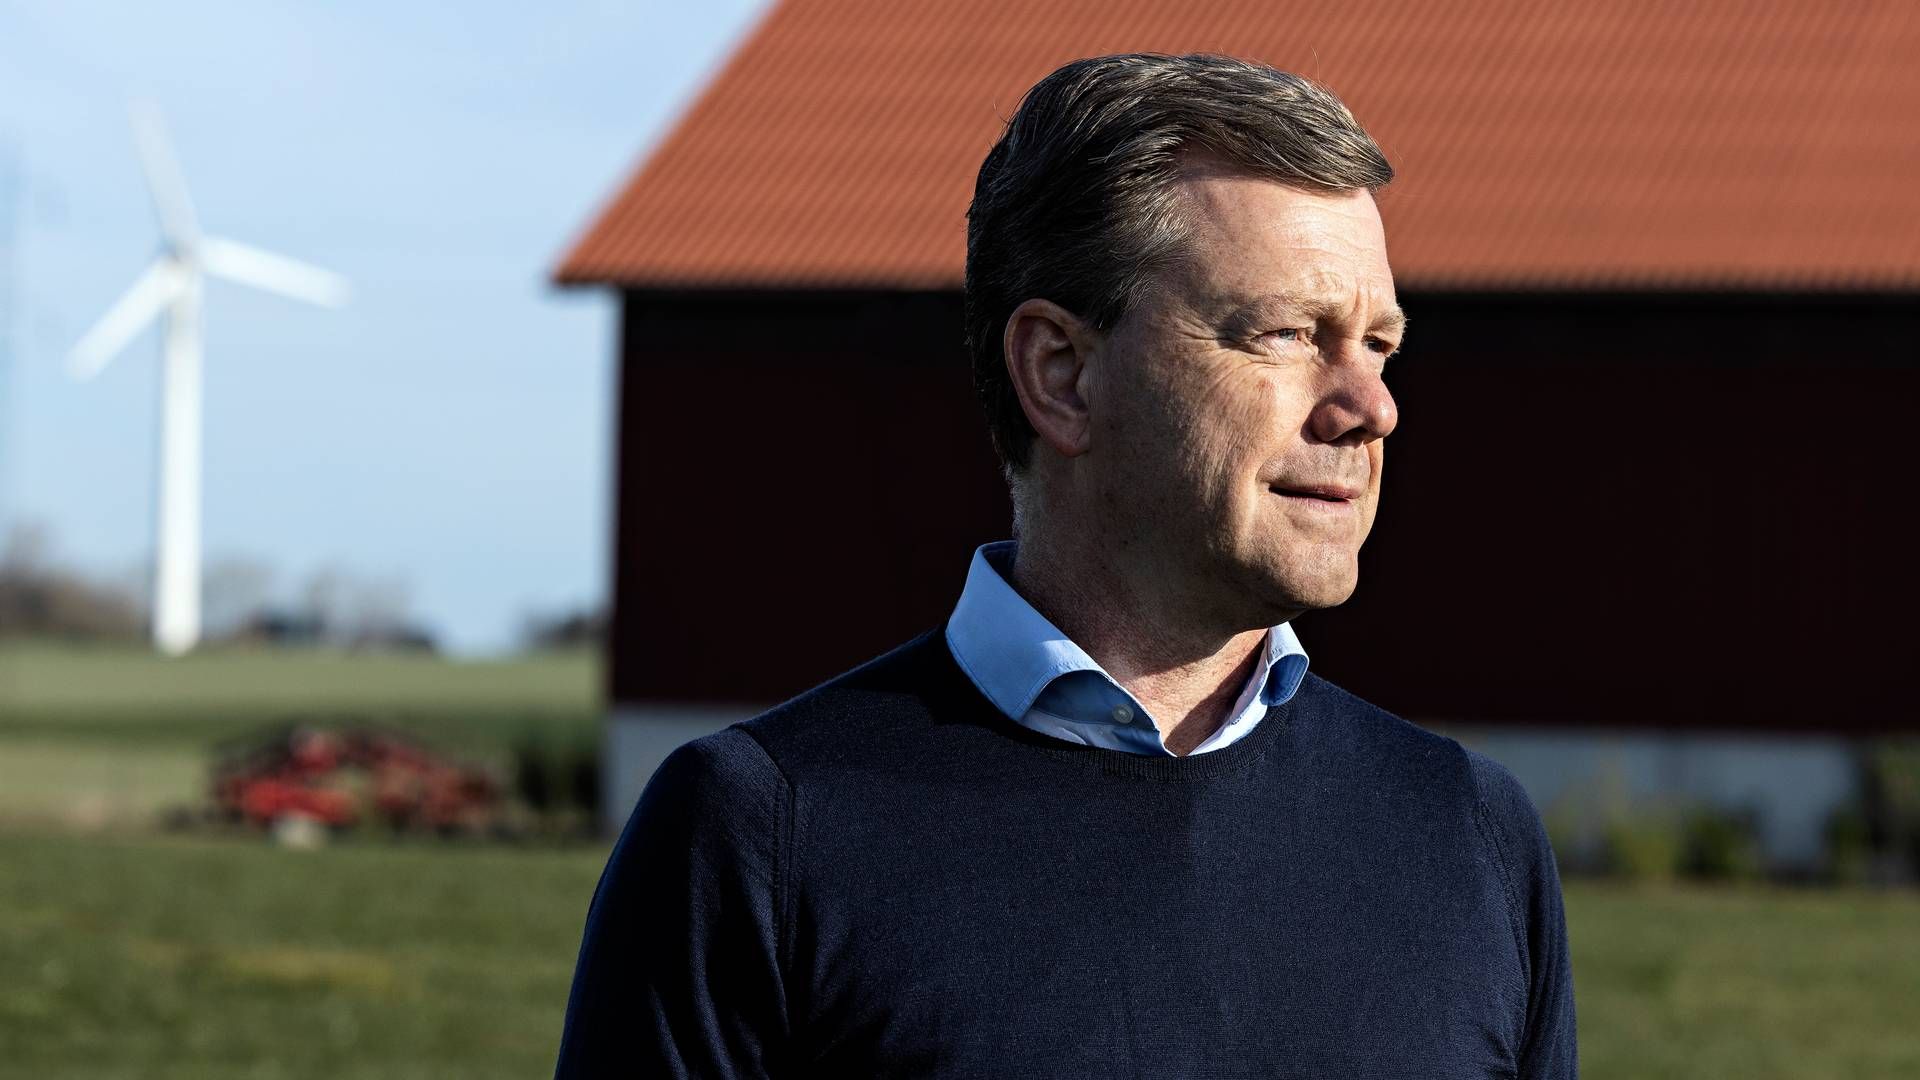 Adm. direktør Kristian Hundebøll. PR-foto: DLG